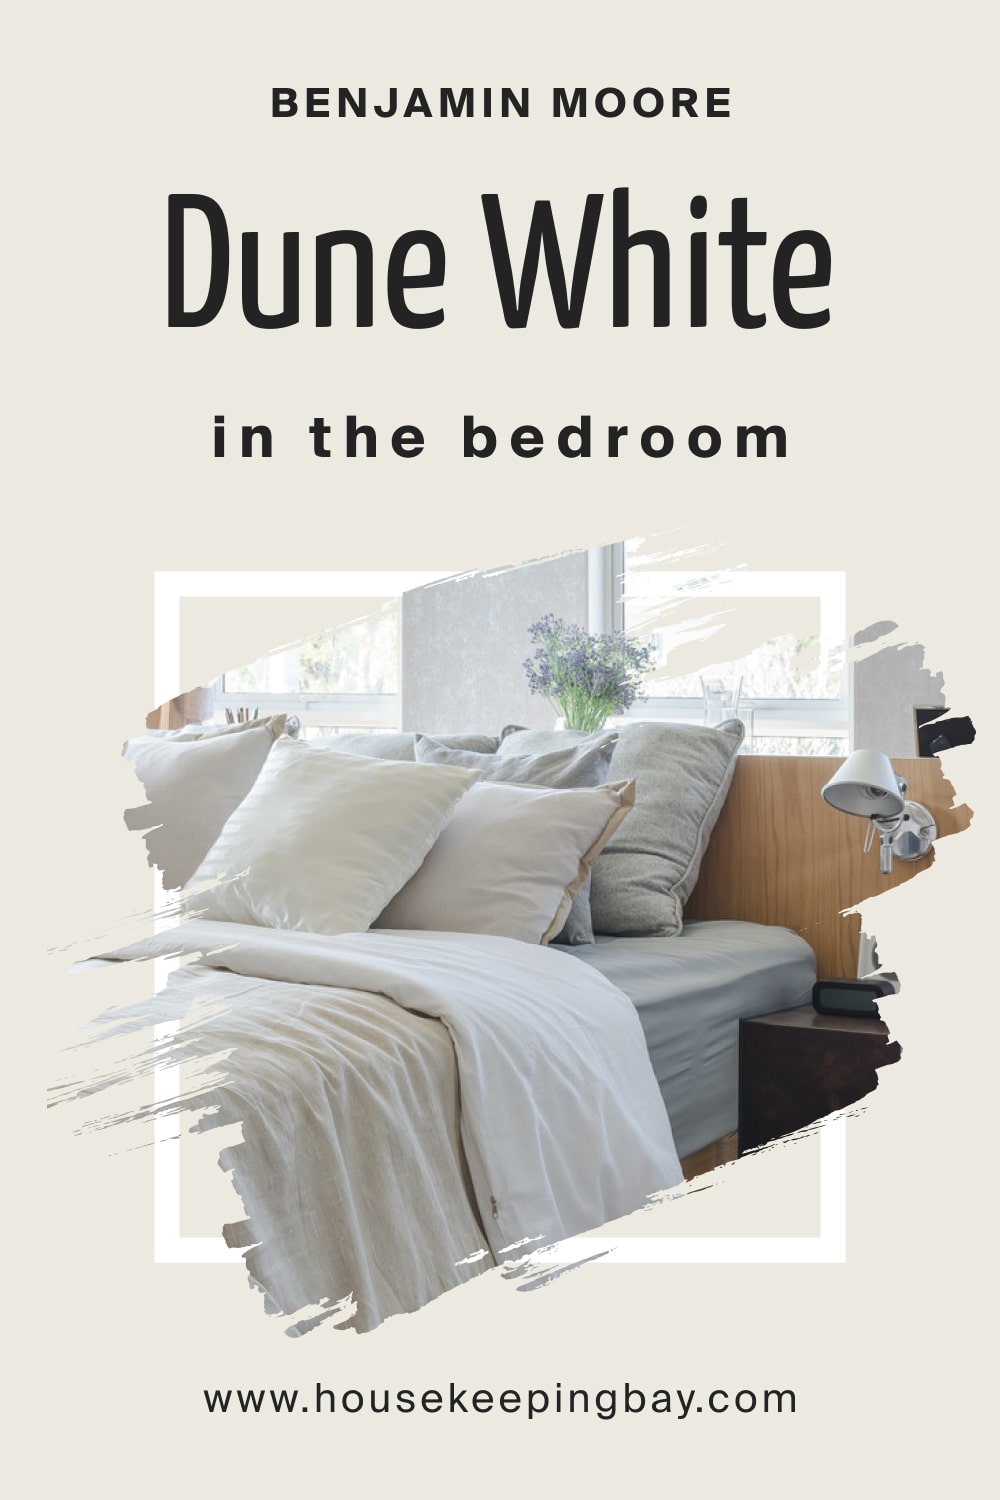 Benjamin Moore. Dune White 968 for the Bedroom